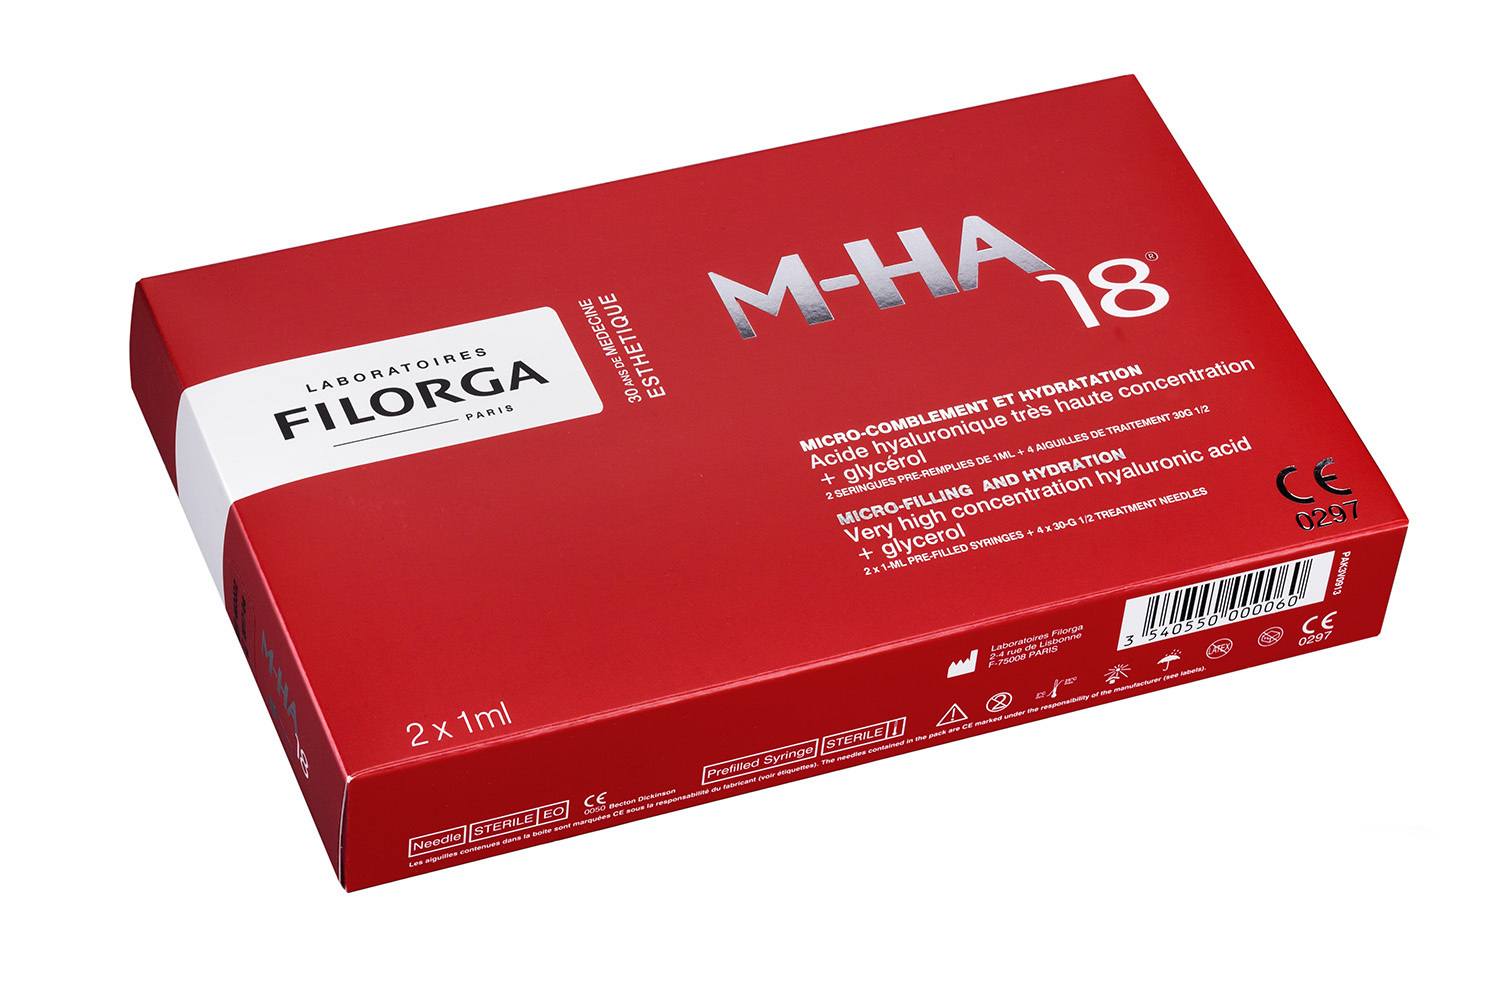 Filorga M-HA18